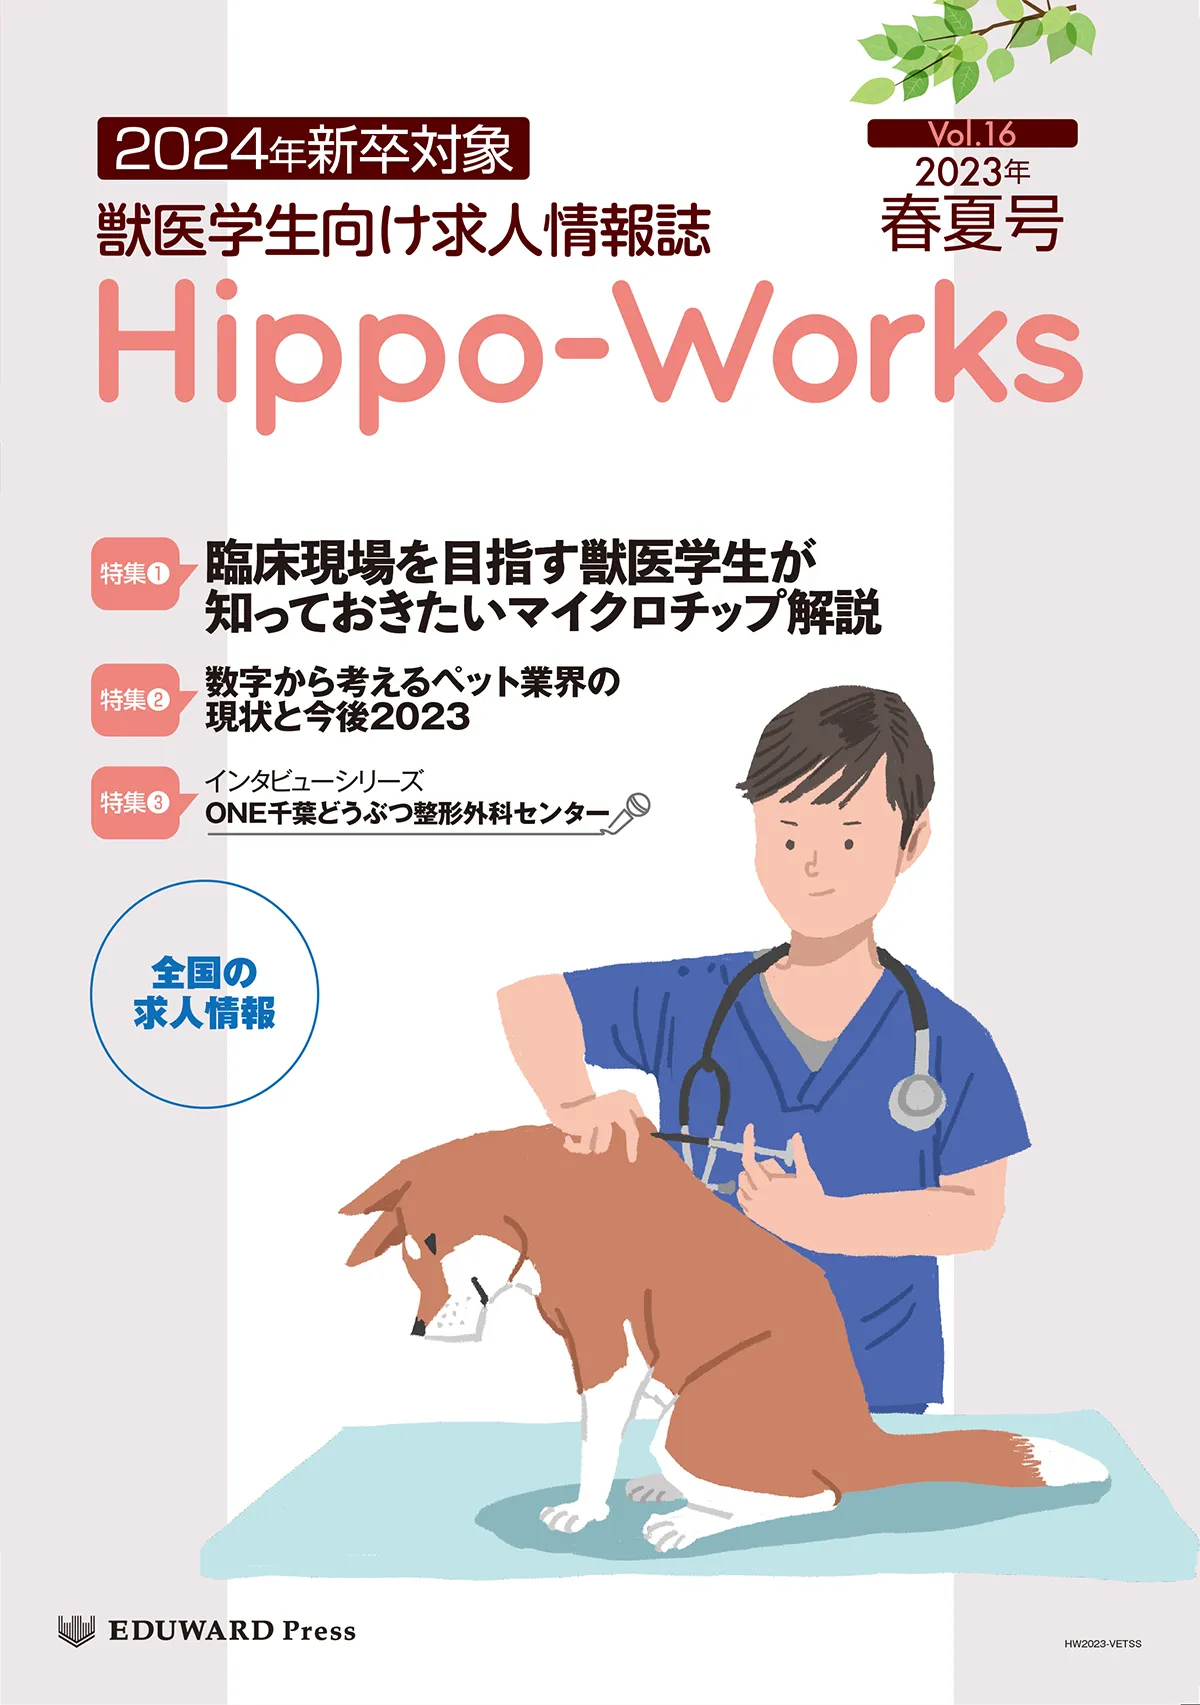 Hippo-Works Vol.16　2023年春夏号